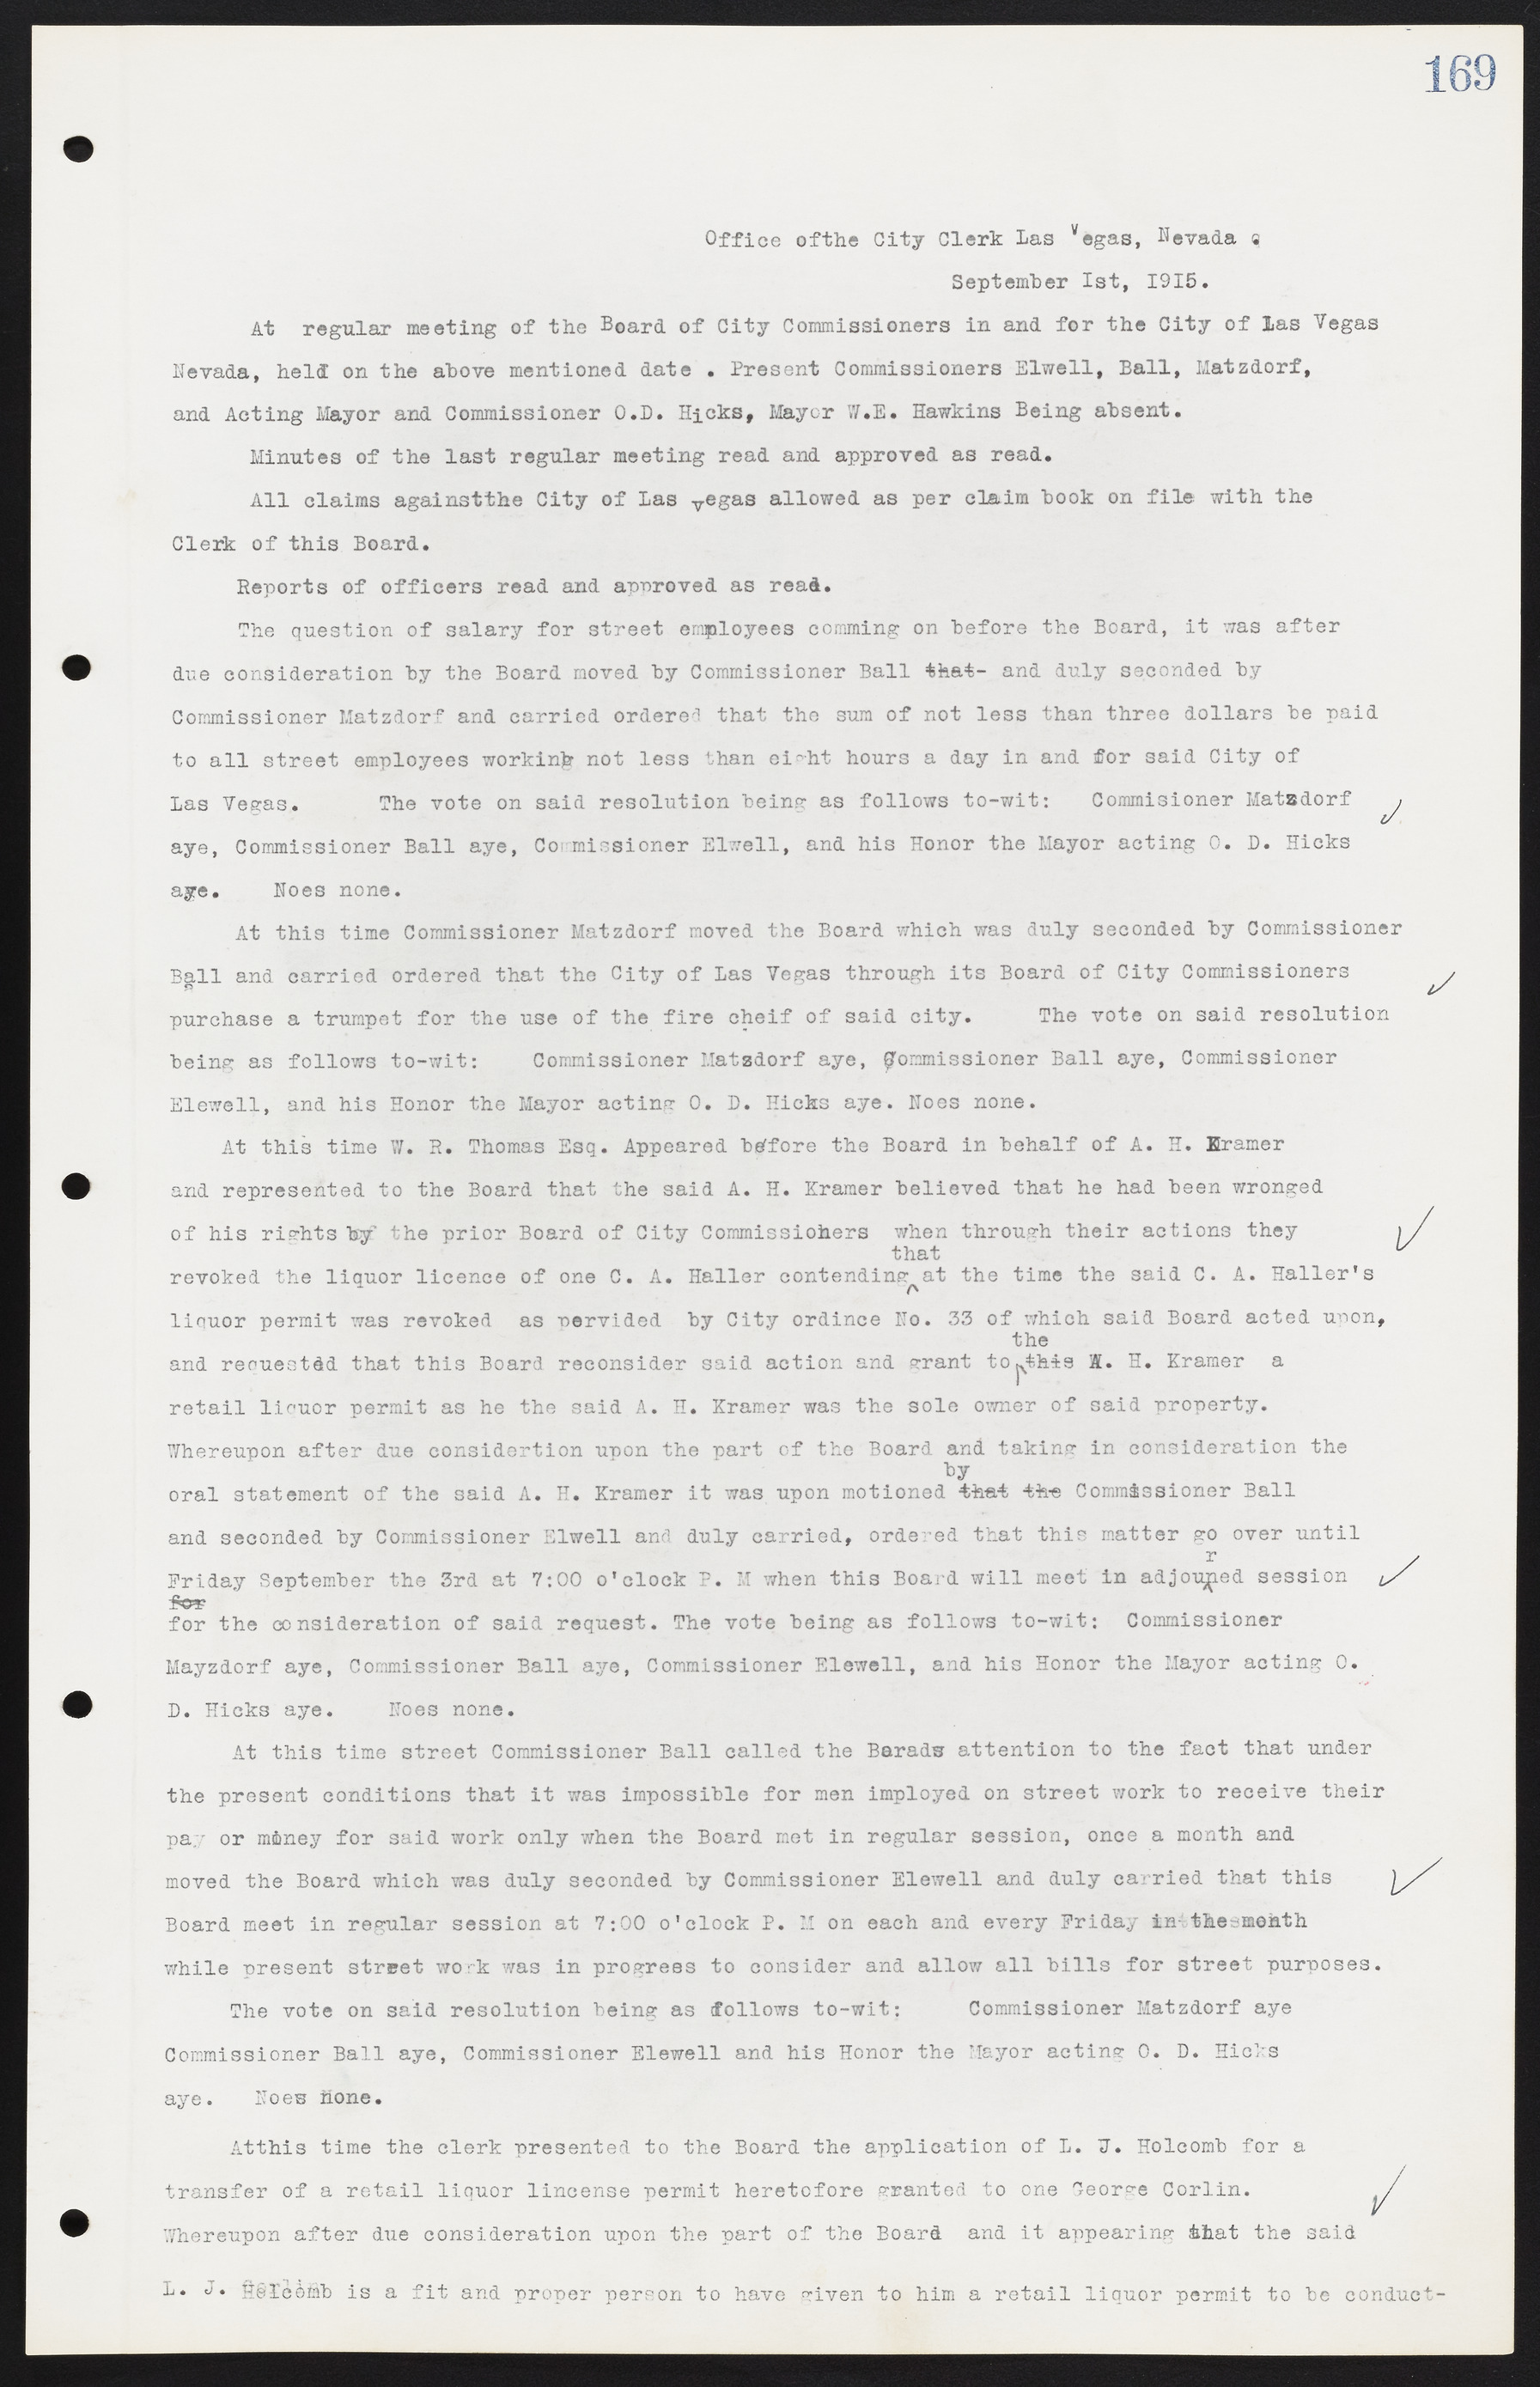 Las Vegas City Commission Minutes, June 22, 1911 to February 7, 1922, lvc000001-185